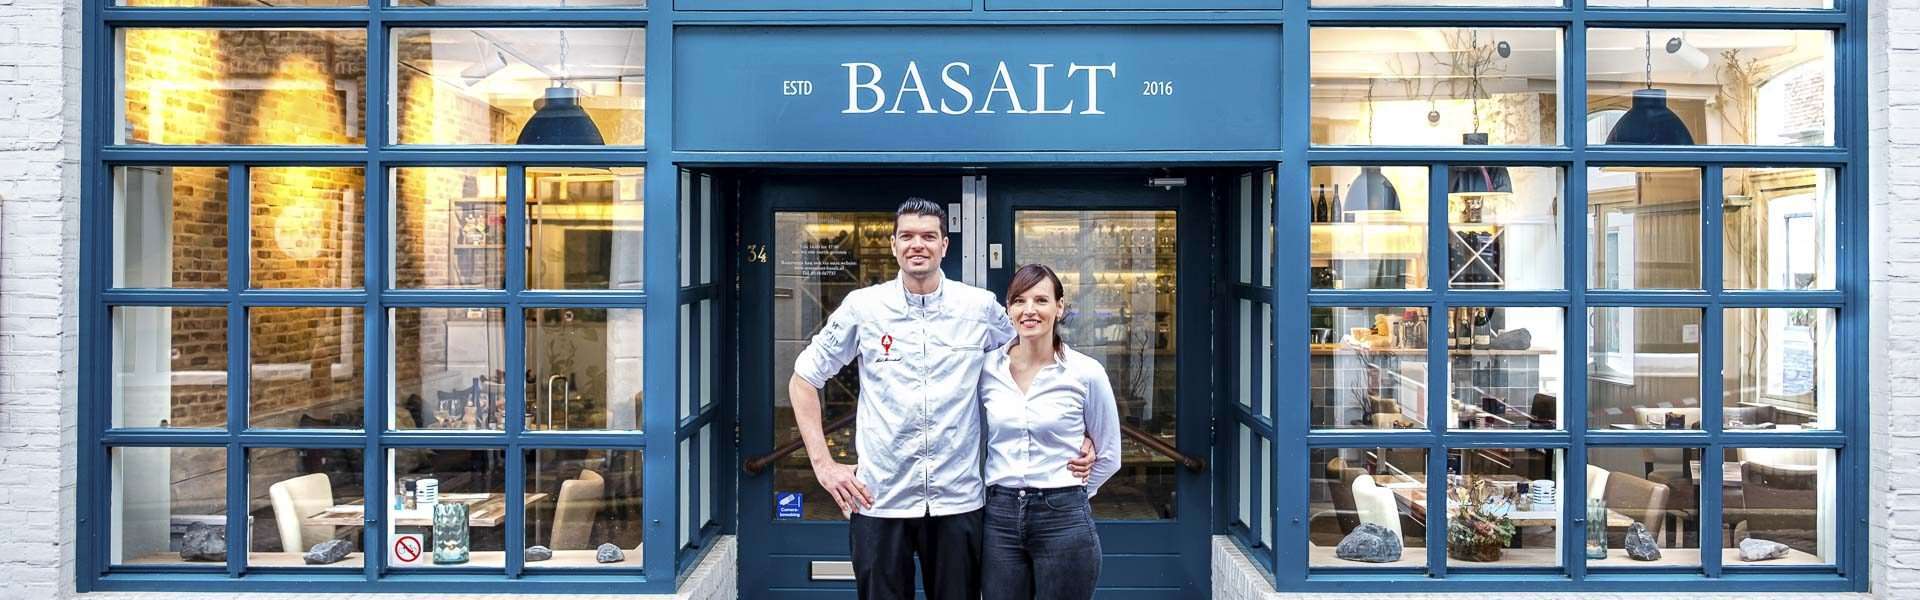 Restaurant Basalt